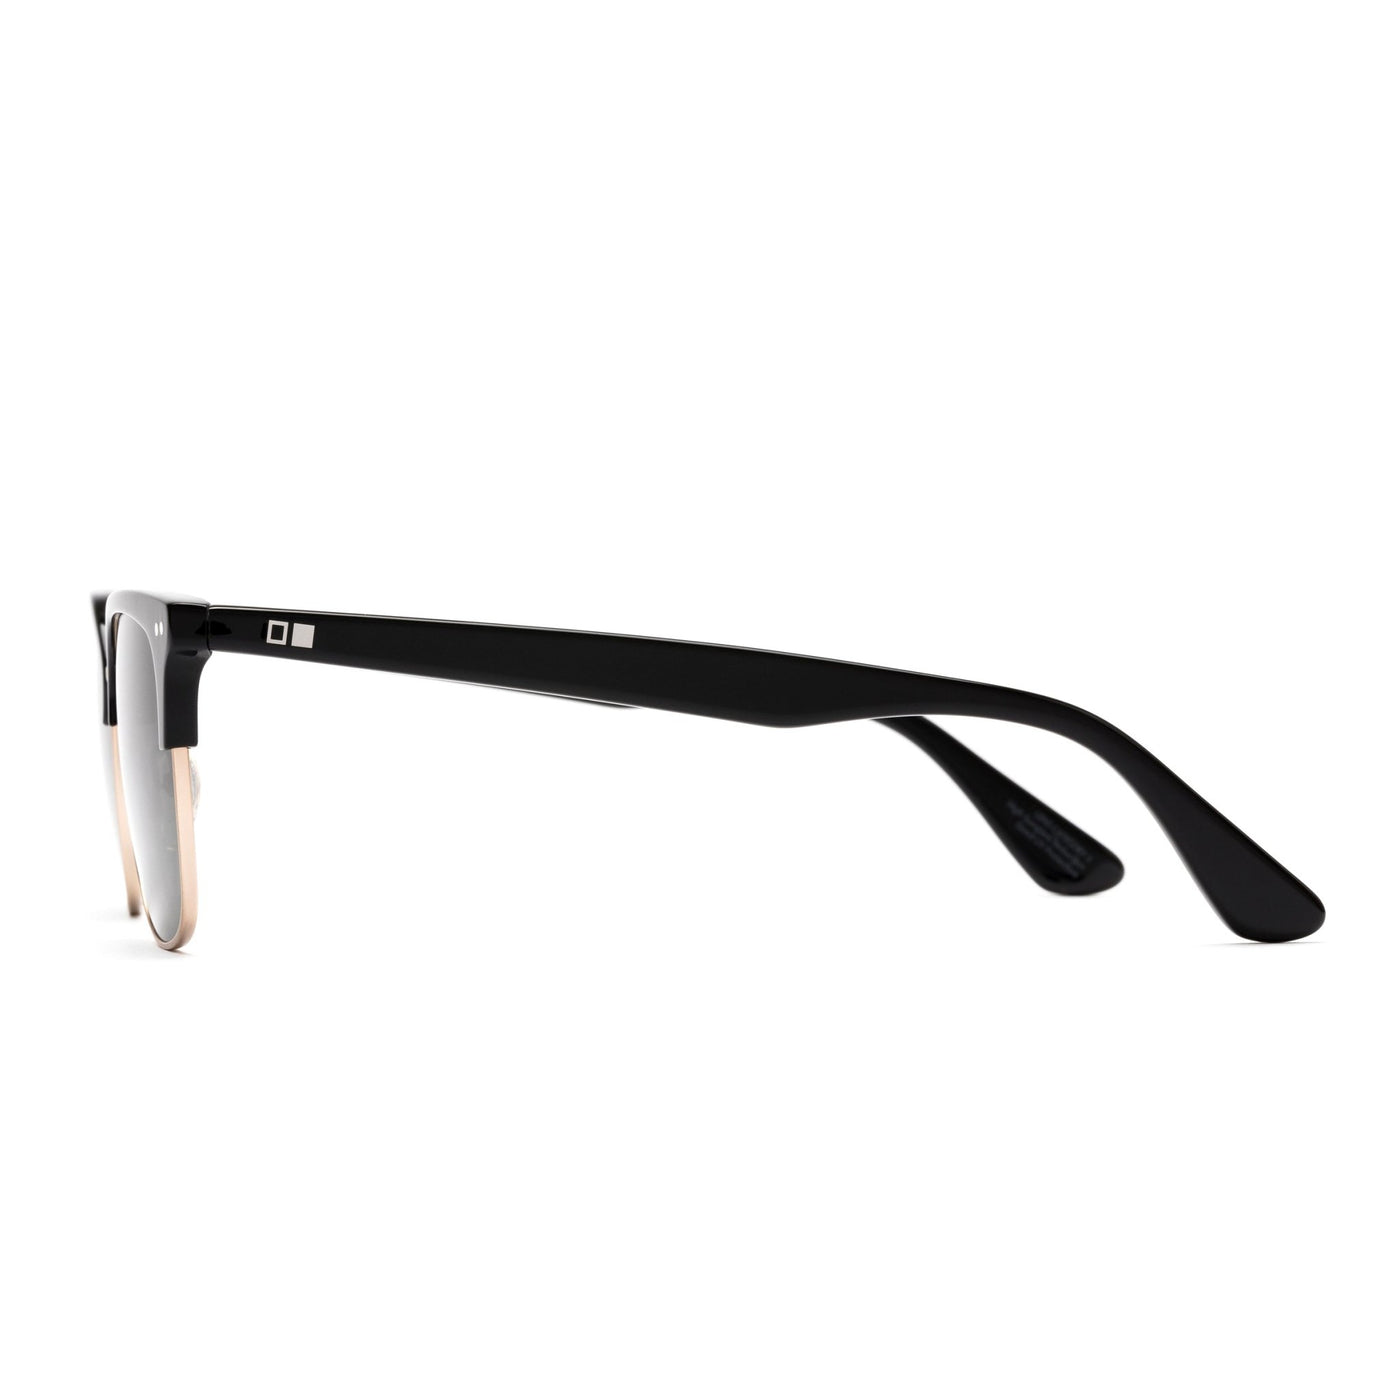 OTIS-Eyewear-Sunglasses-black-100club